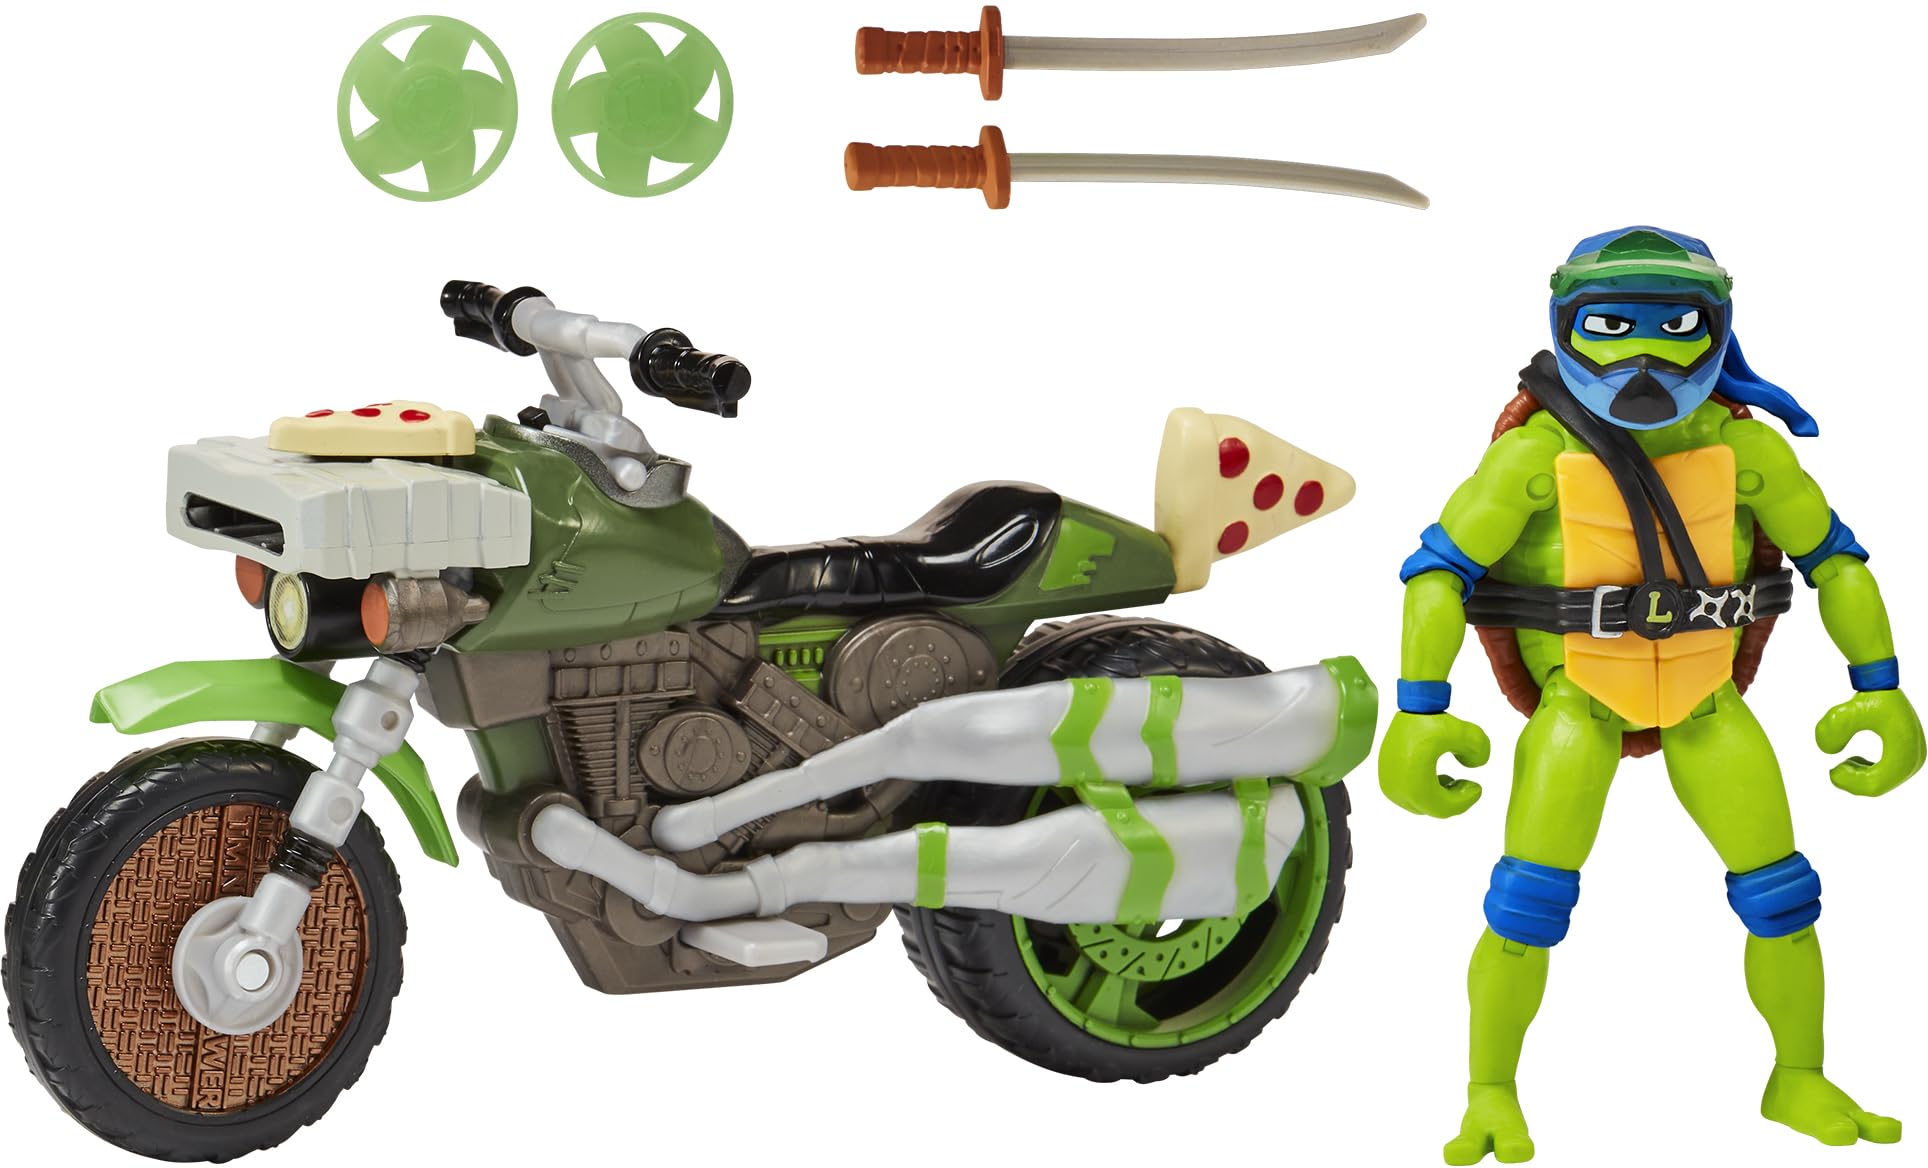 $10.19: Teenage Mutant Ninja Turtles: Mutant Mayhem Ninja Kick Cycle with Exclusive Leonardo Figure at Amazon